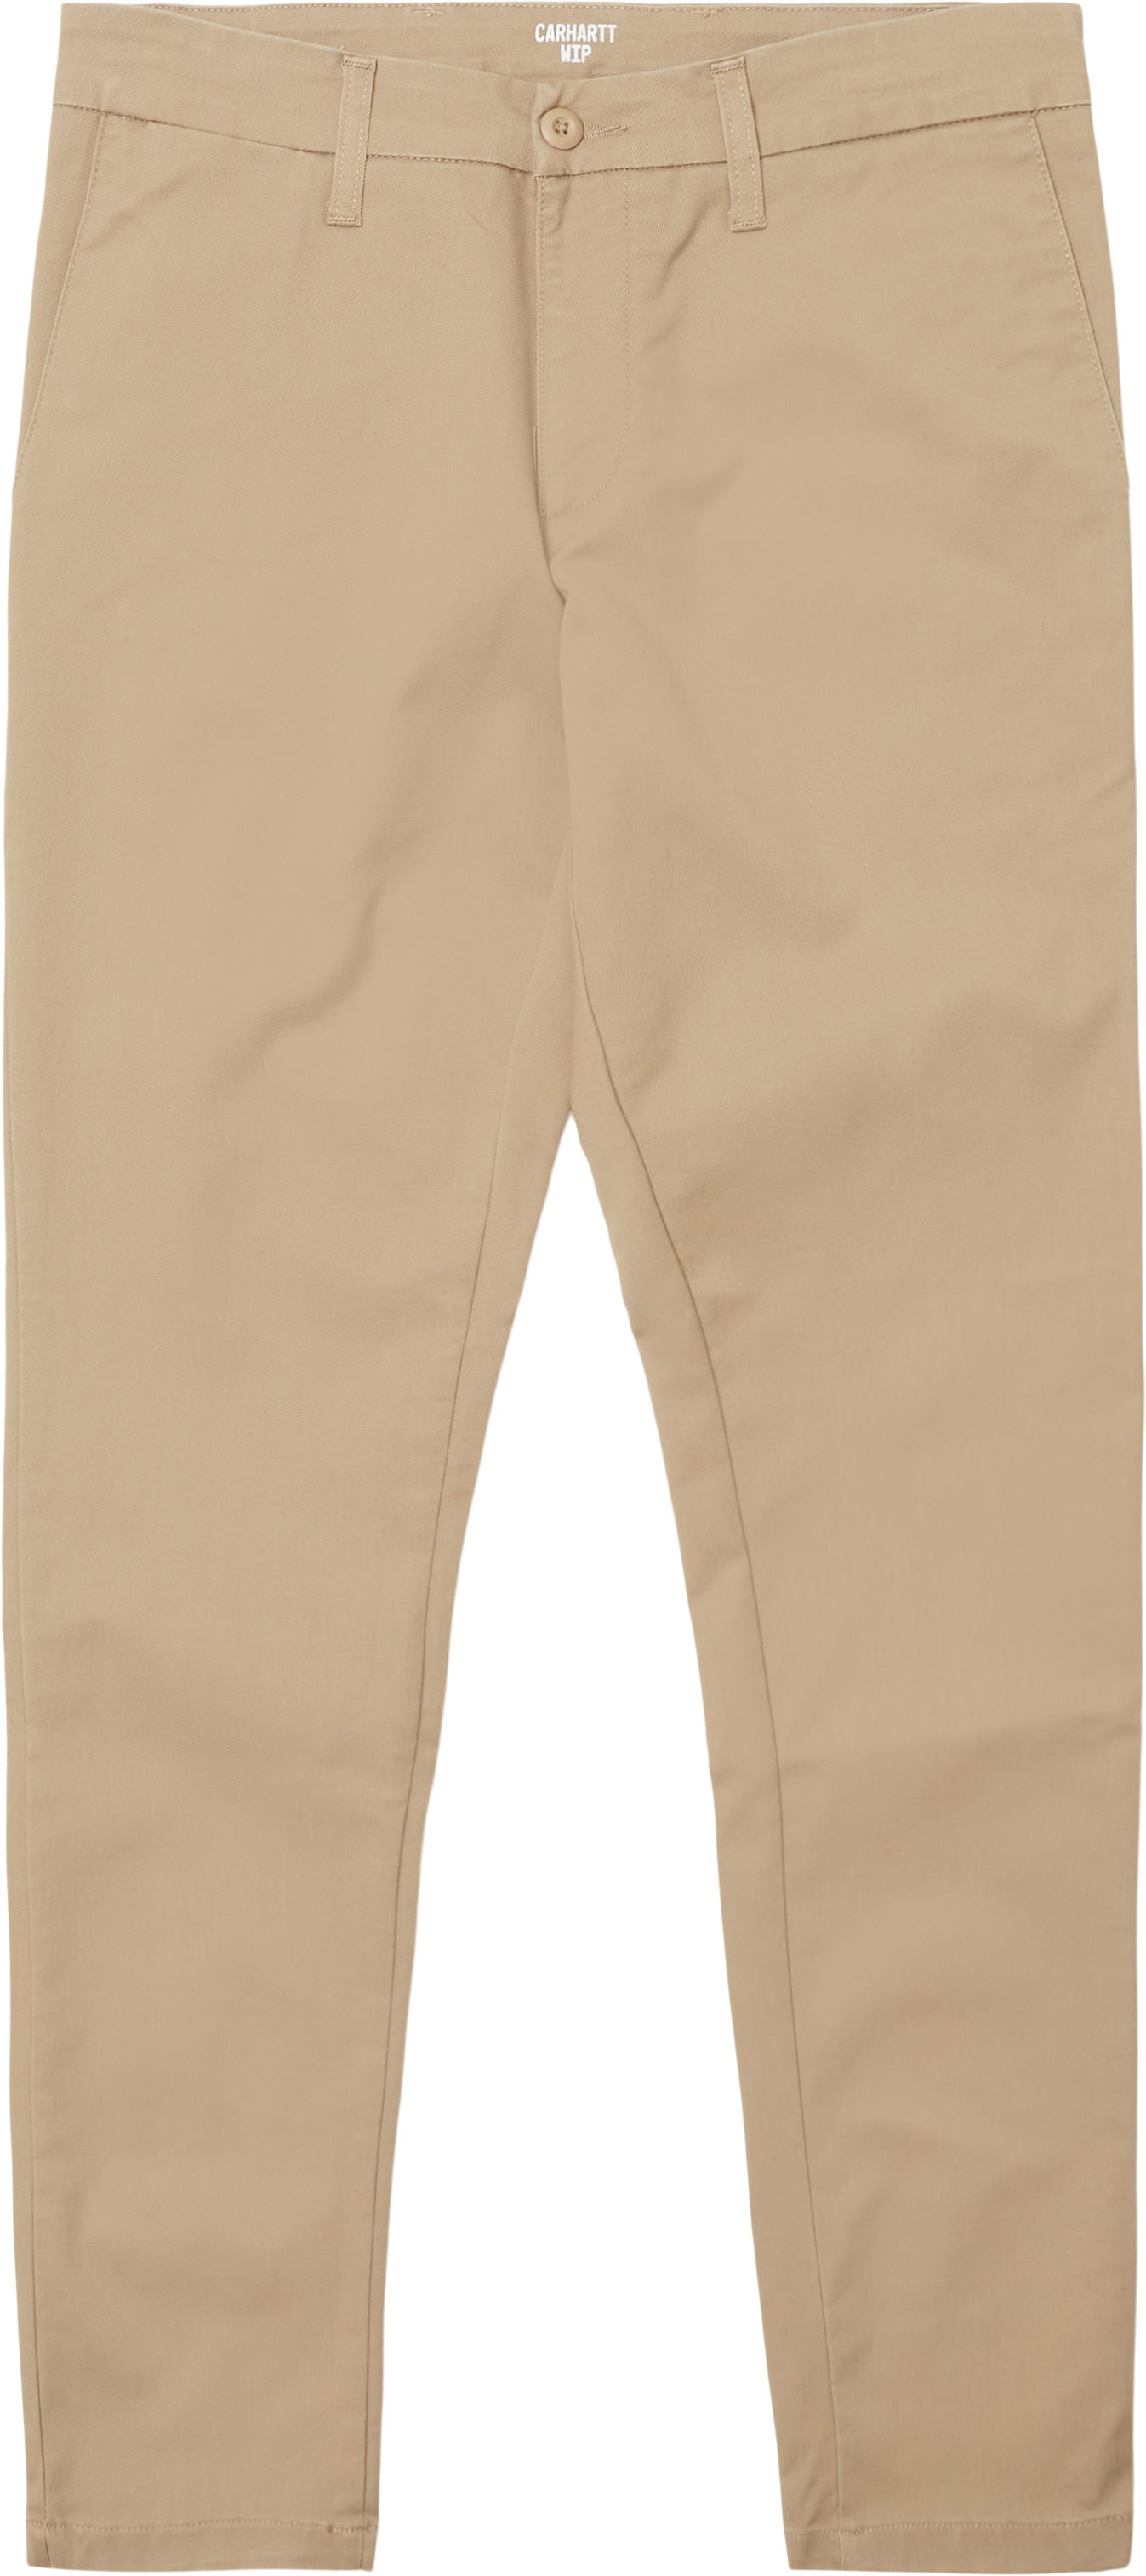 Sid Pant I003367 - Trousers - Slim fit - Sand